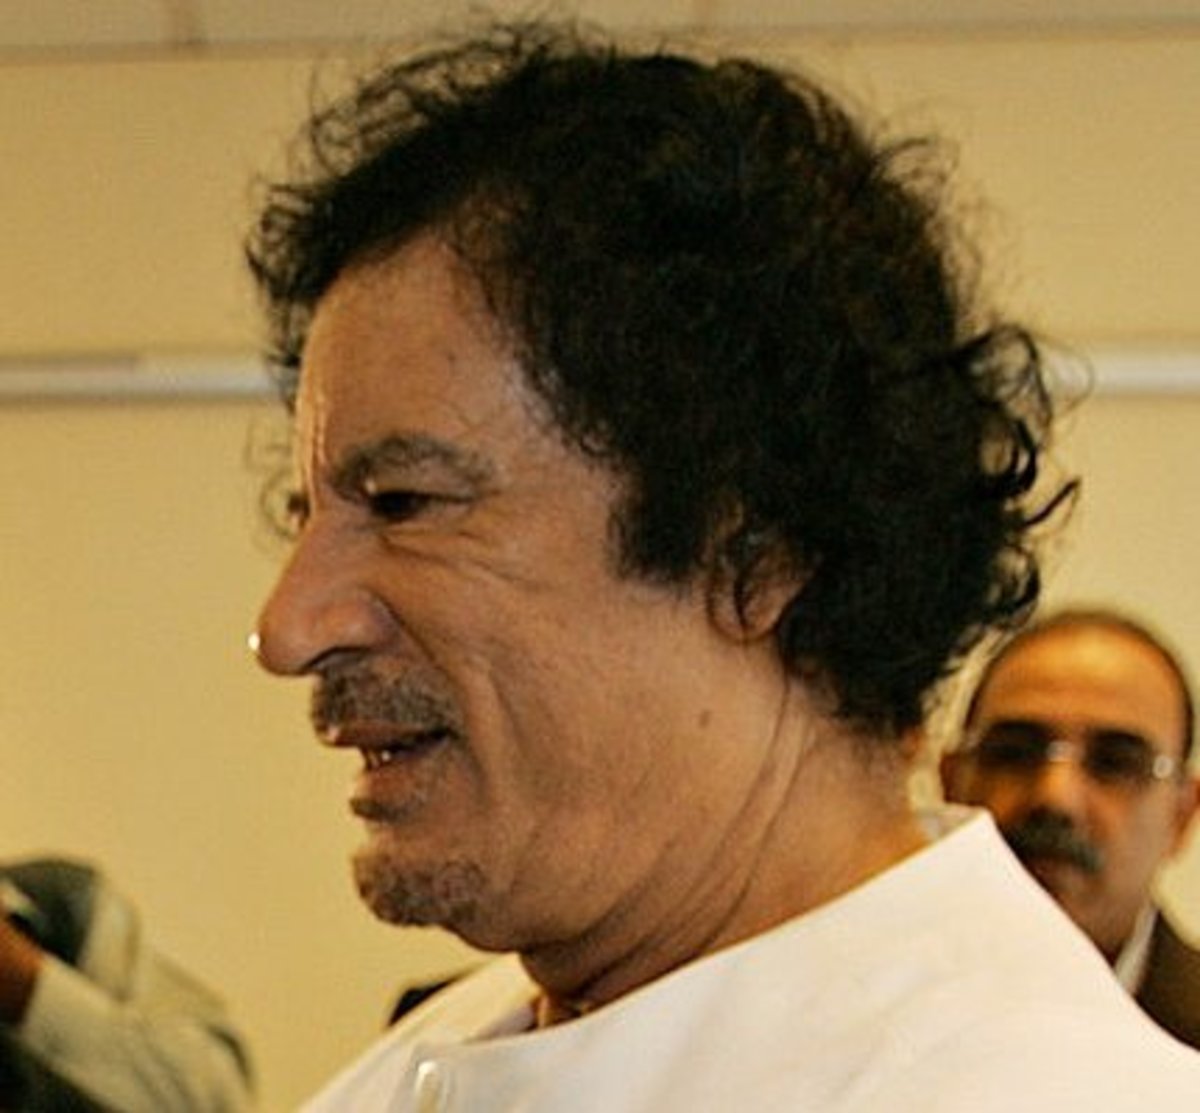 Moamarr Gadhalfi, possibly border-line psychiatric